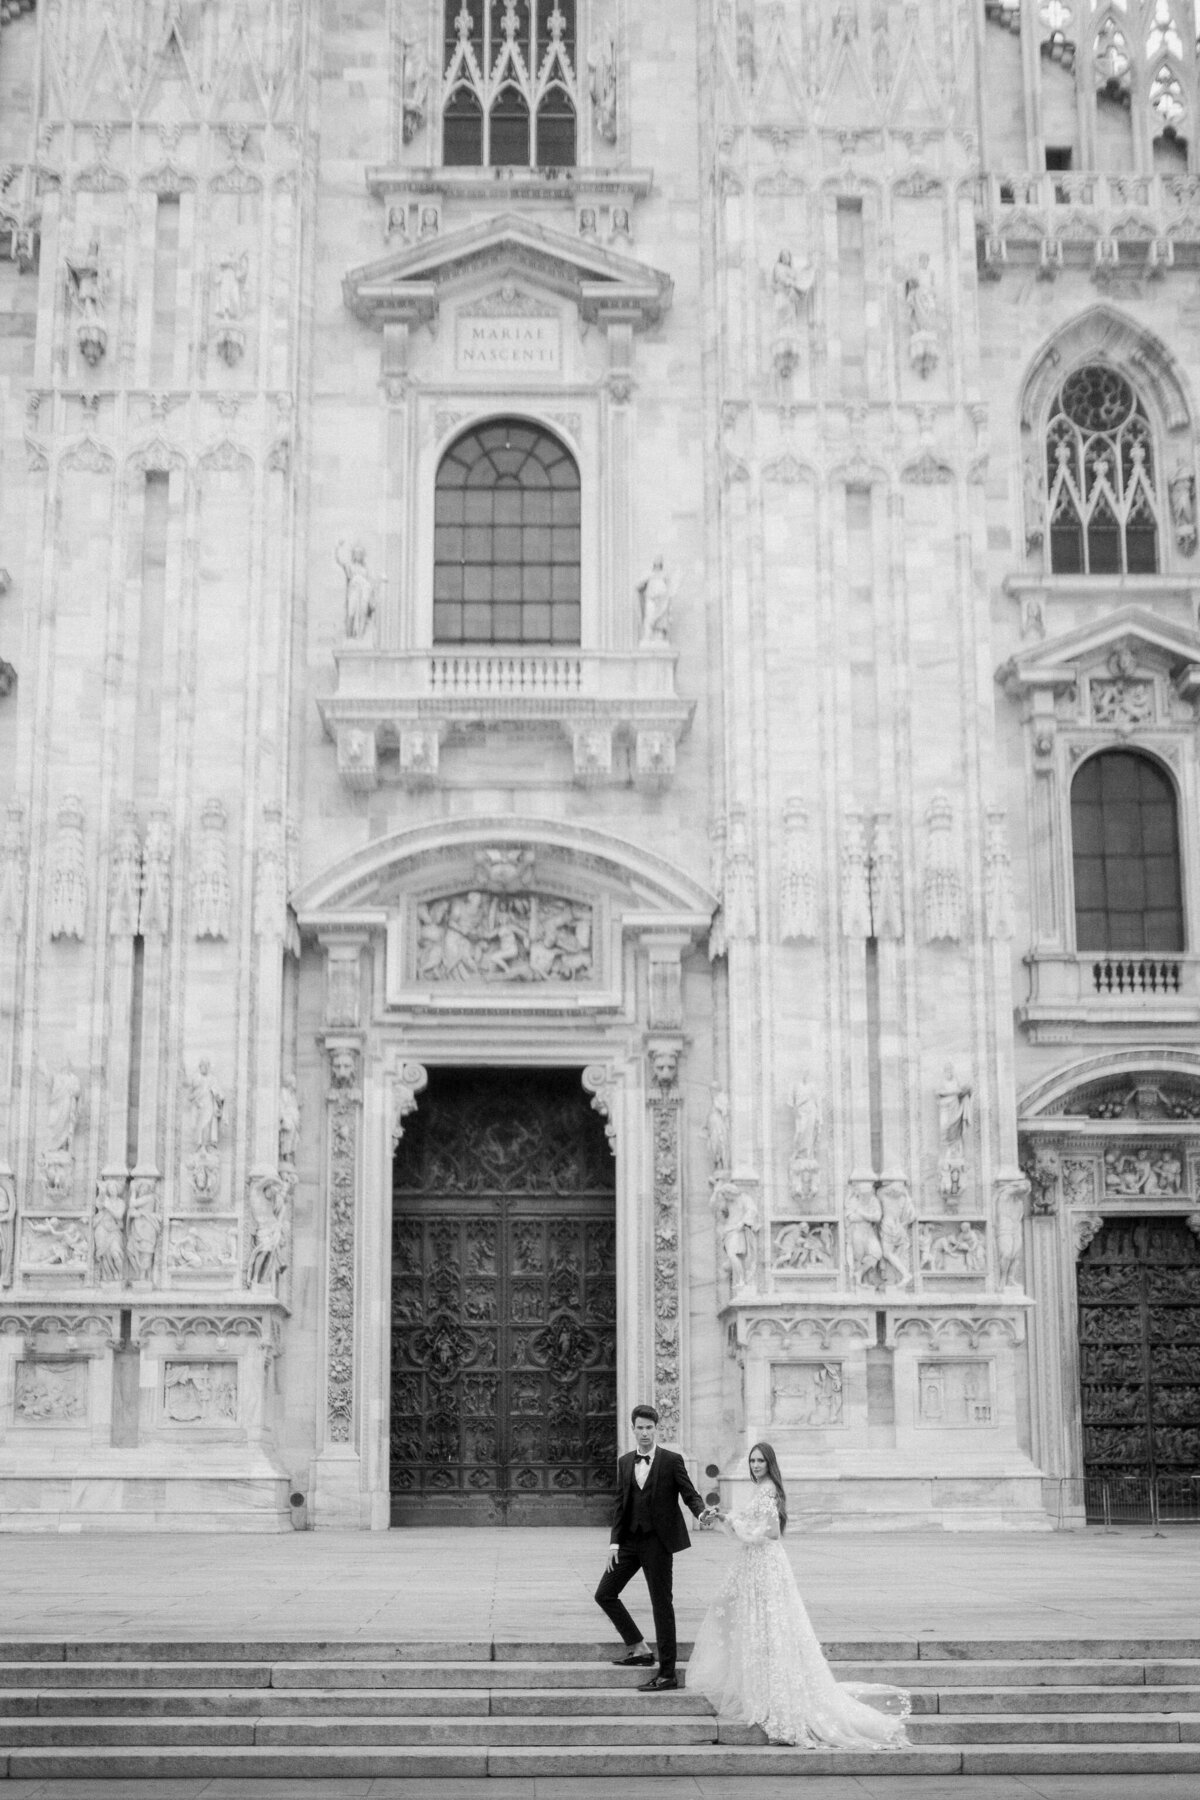 046-Milan-Duomo-Inspiration-Love-Story Elopement-Cinematic-Romance-Destination-Wedding-Editorial-Luxury-Fine-Art-Lisa-Vigliotta-Photography